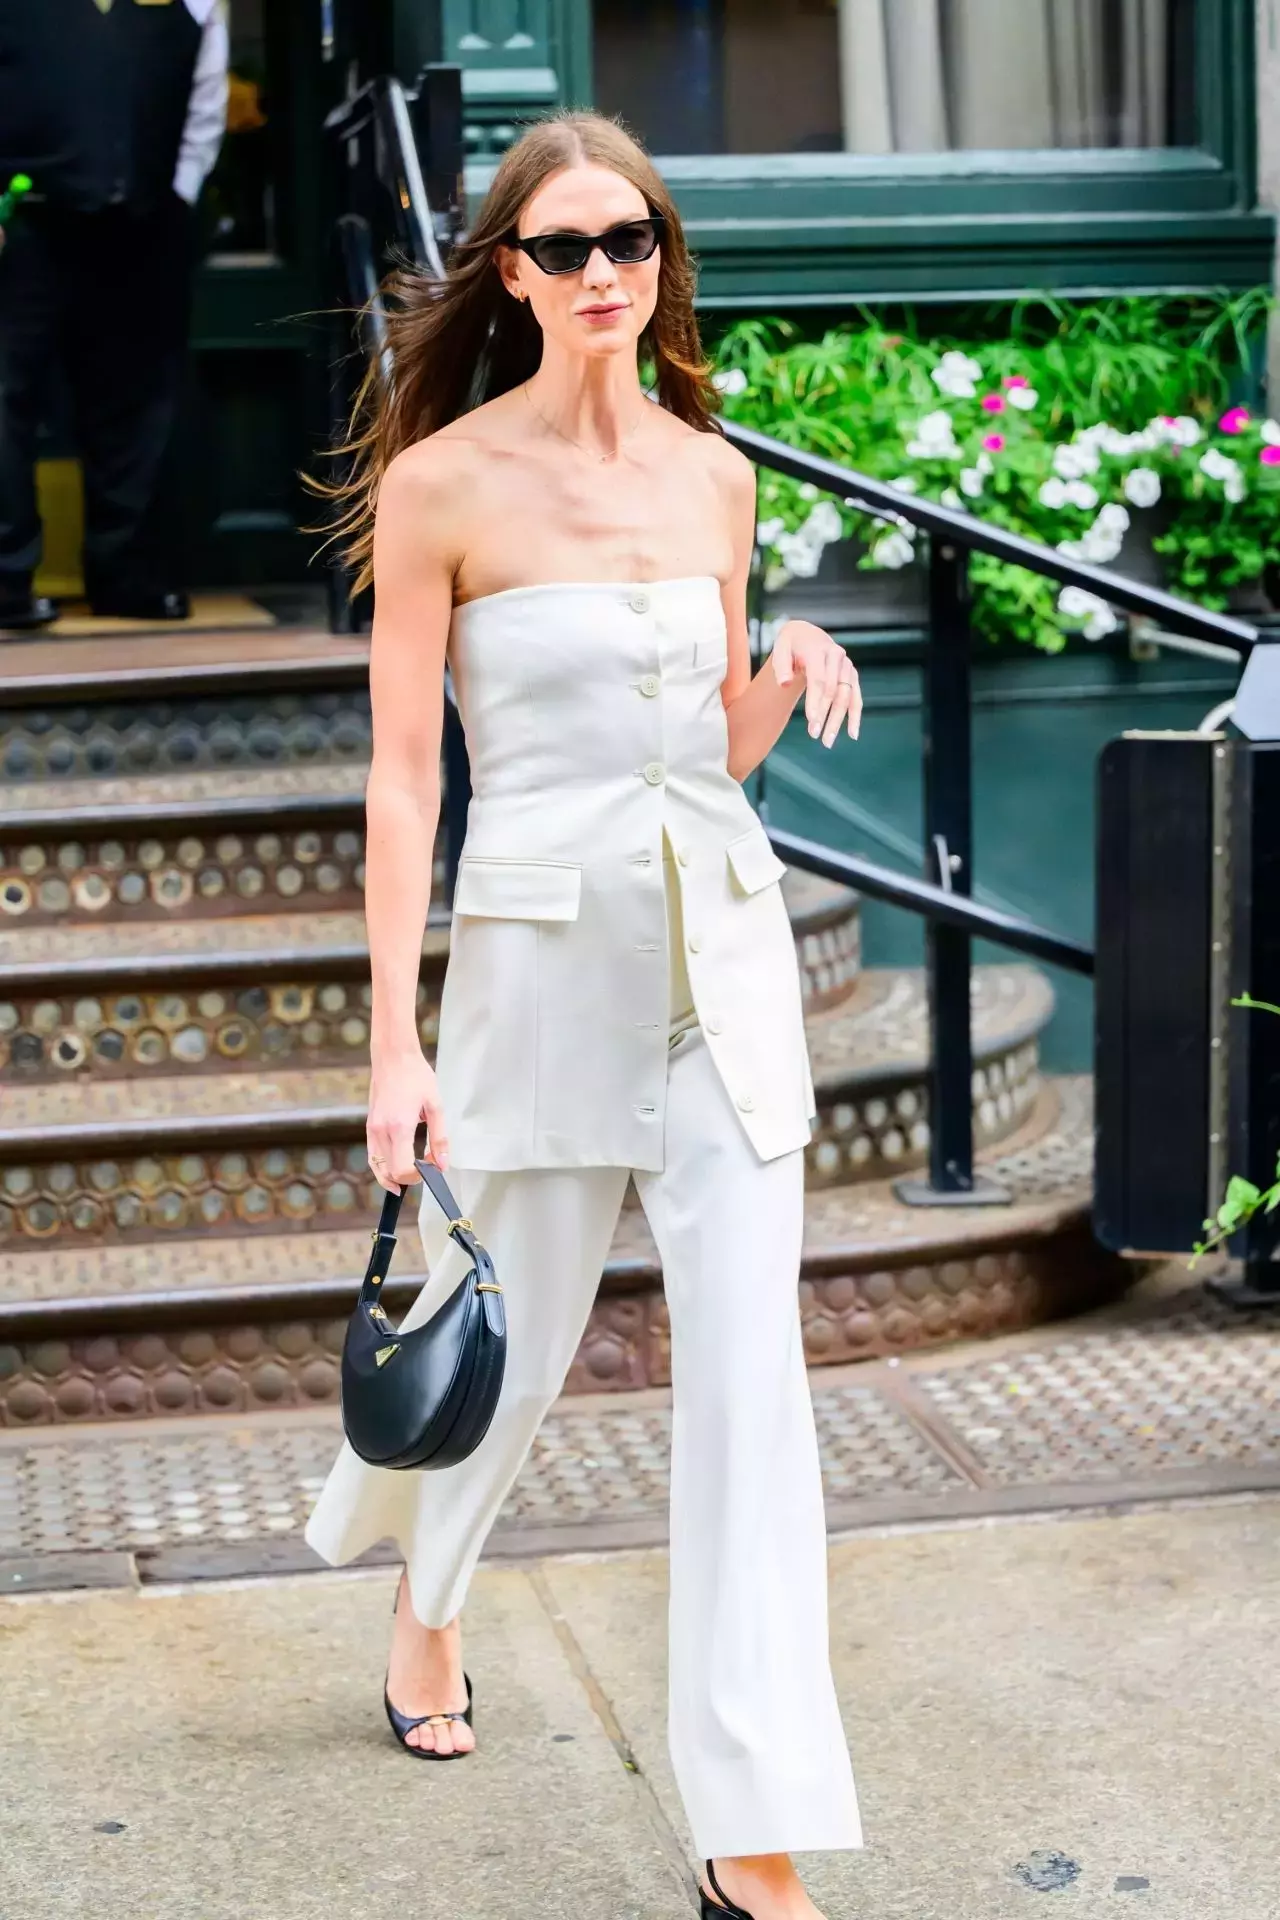 Karlie Kloss Stuns In Chic White Pantsuit At Tribeca Film Festival